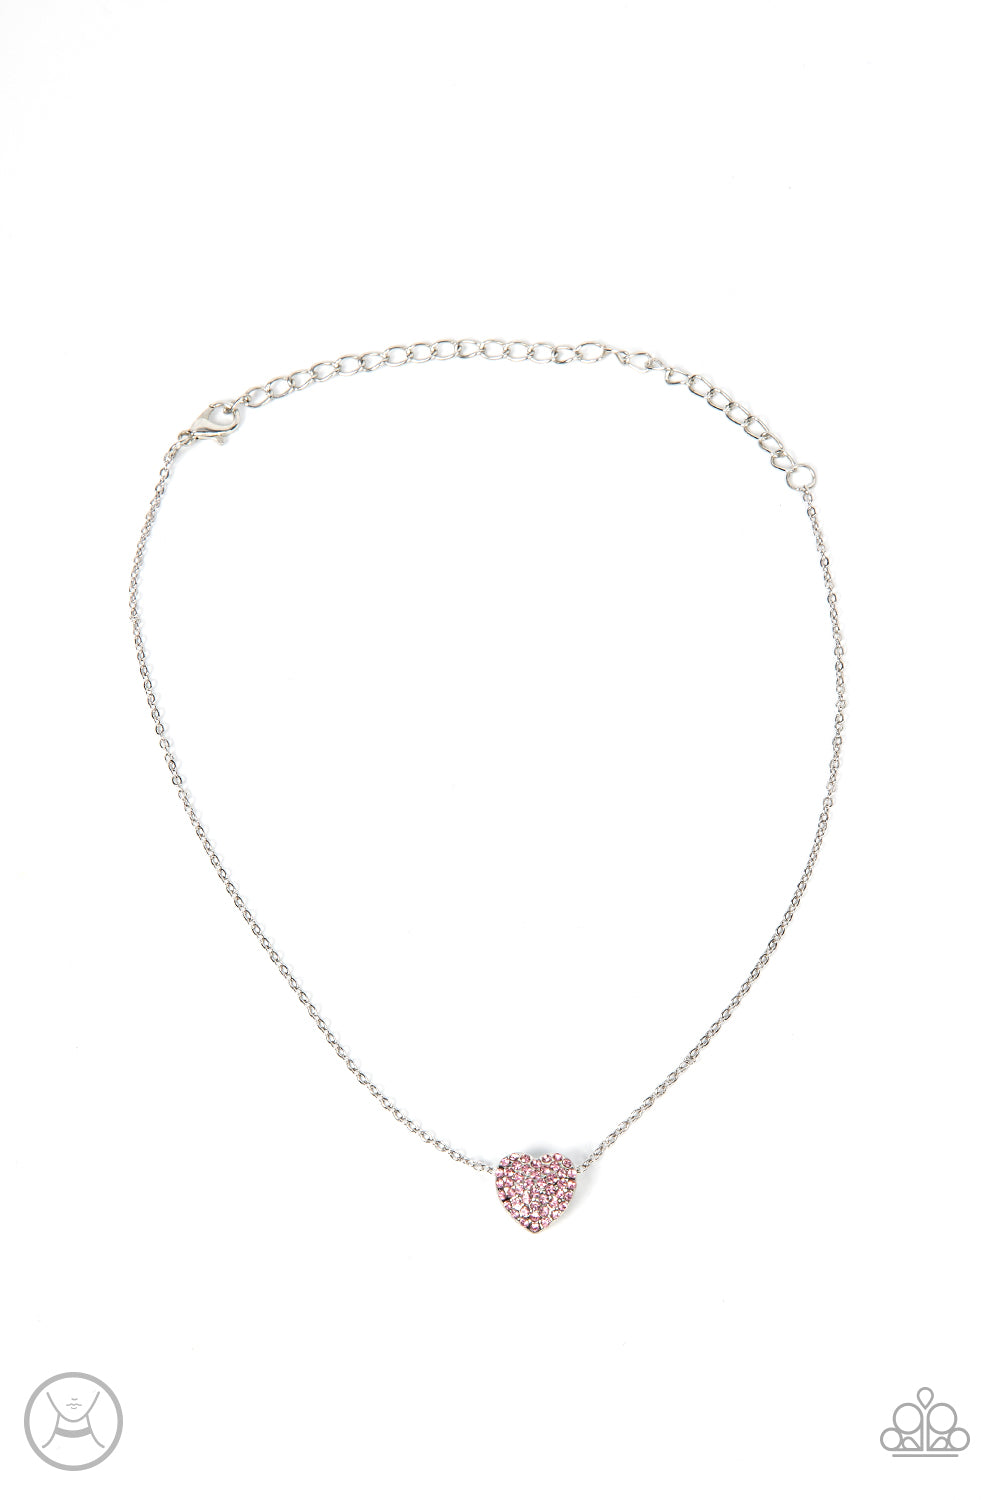 Twitterpated Twinkle - Pink Rhineston Heart Choker Necklace - Paparazzi Accessories